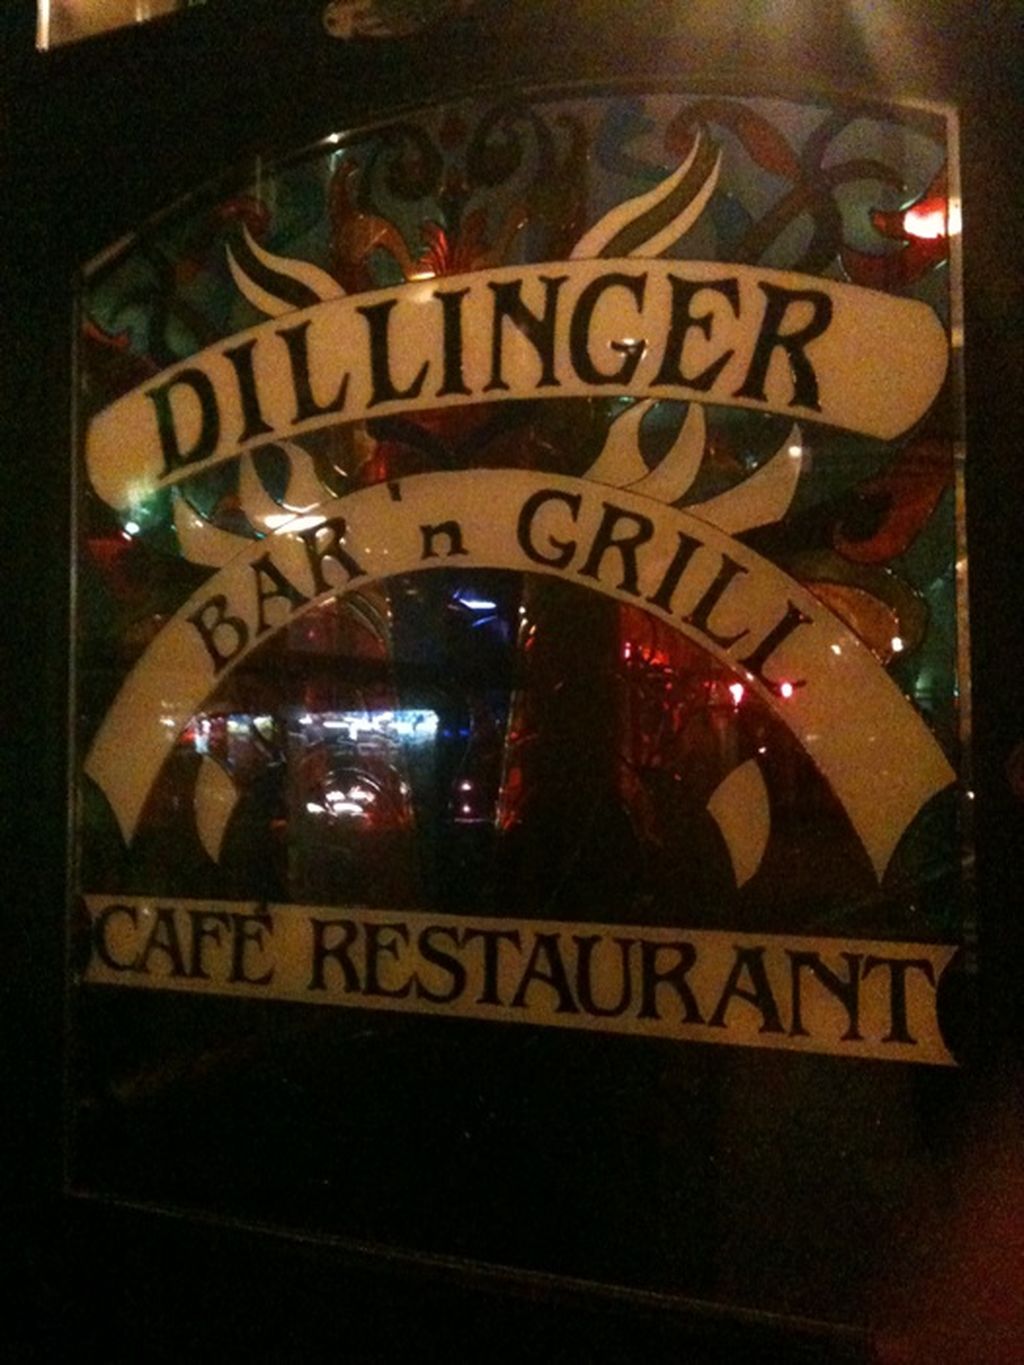 Nutzerfoto 10 Dillinger Chicago-Bar, Grill